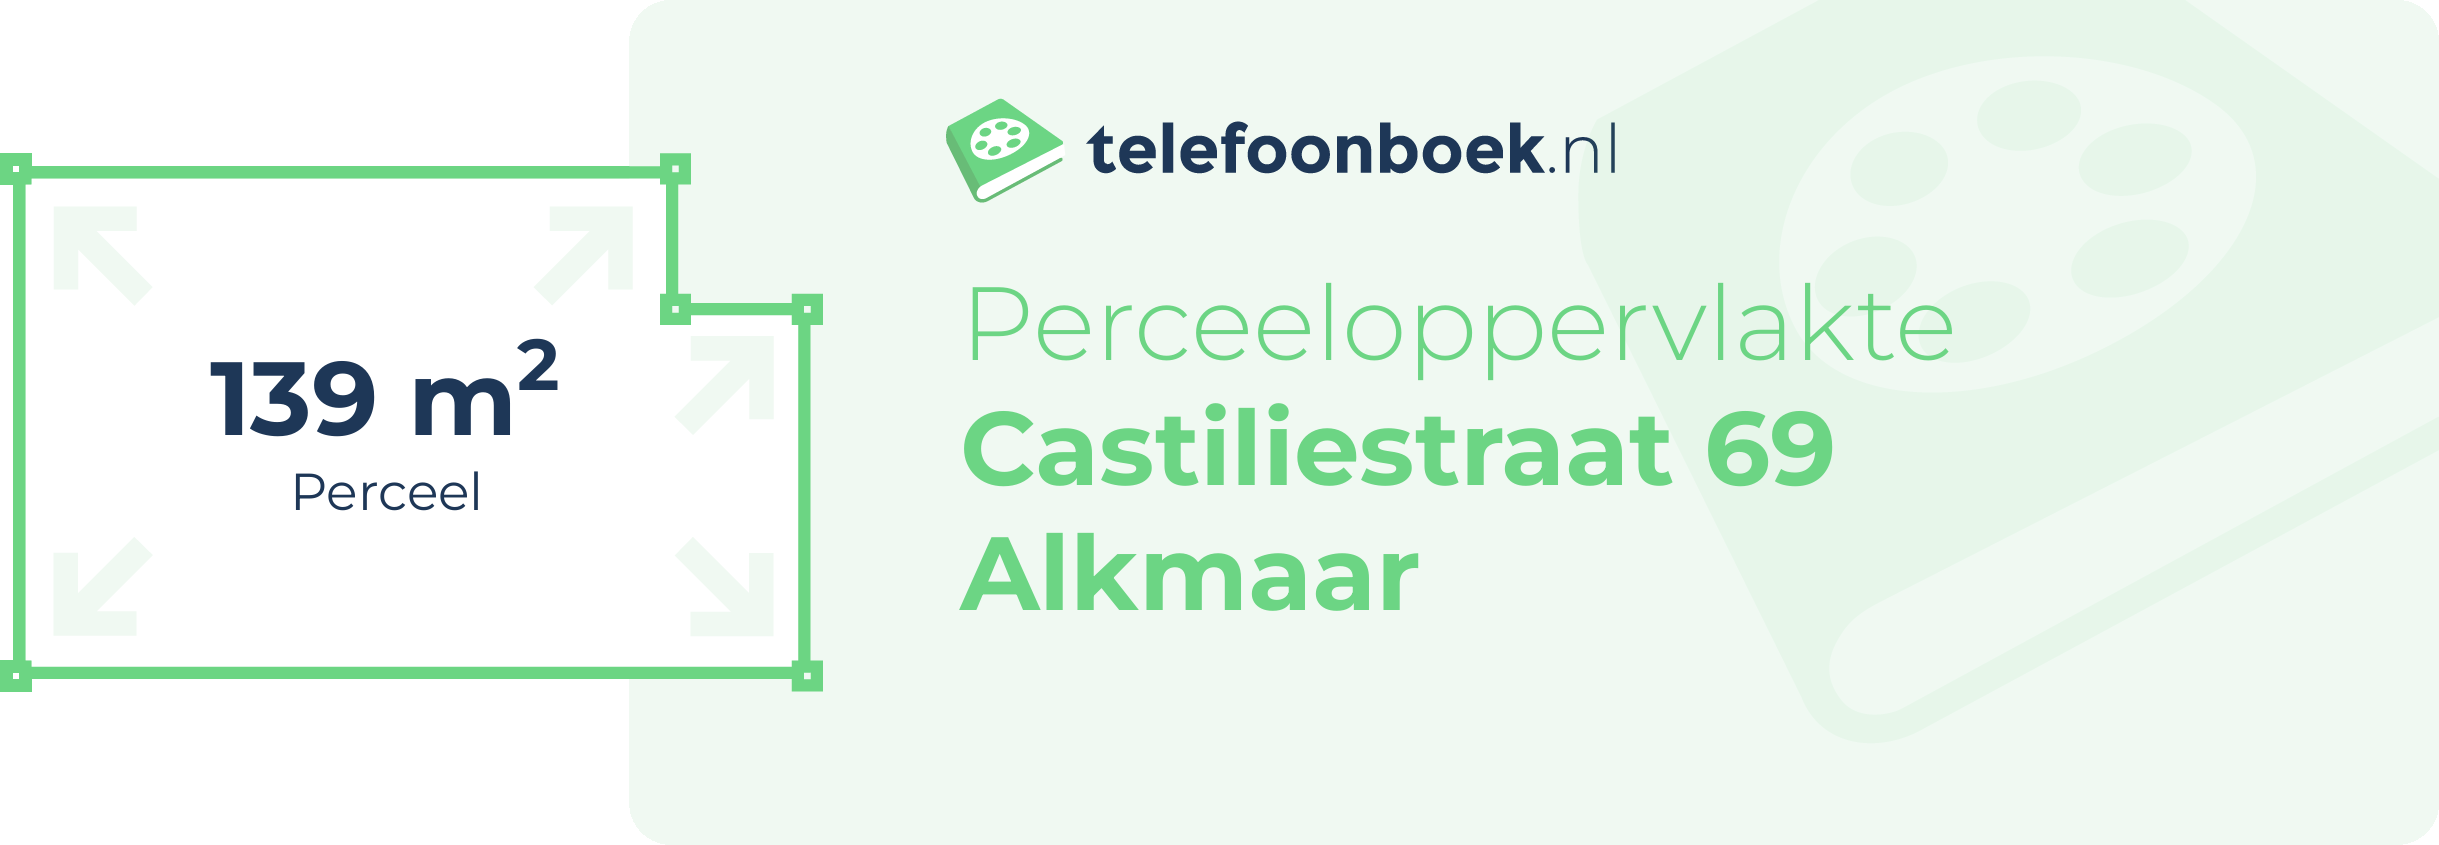 Perceeloppervlakte Castiliestraat 69 Alkmaar